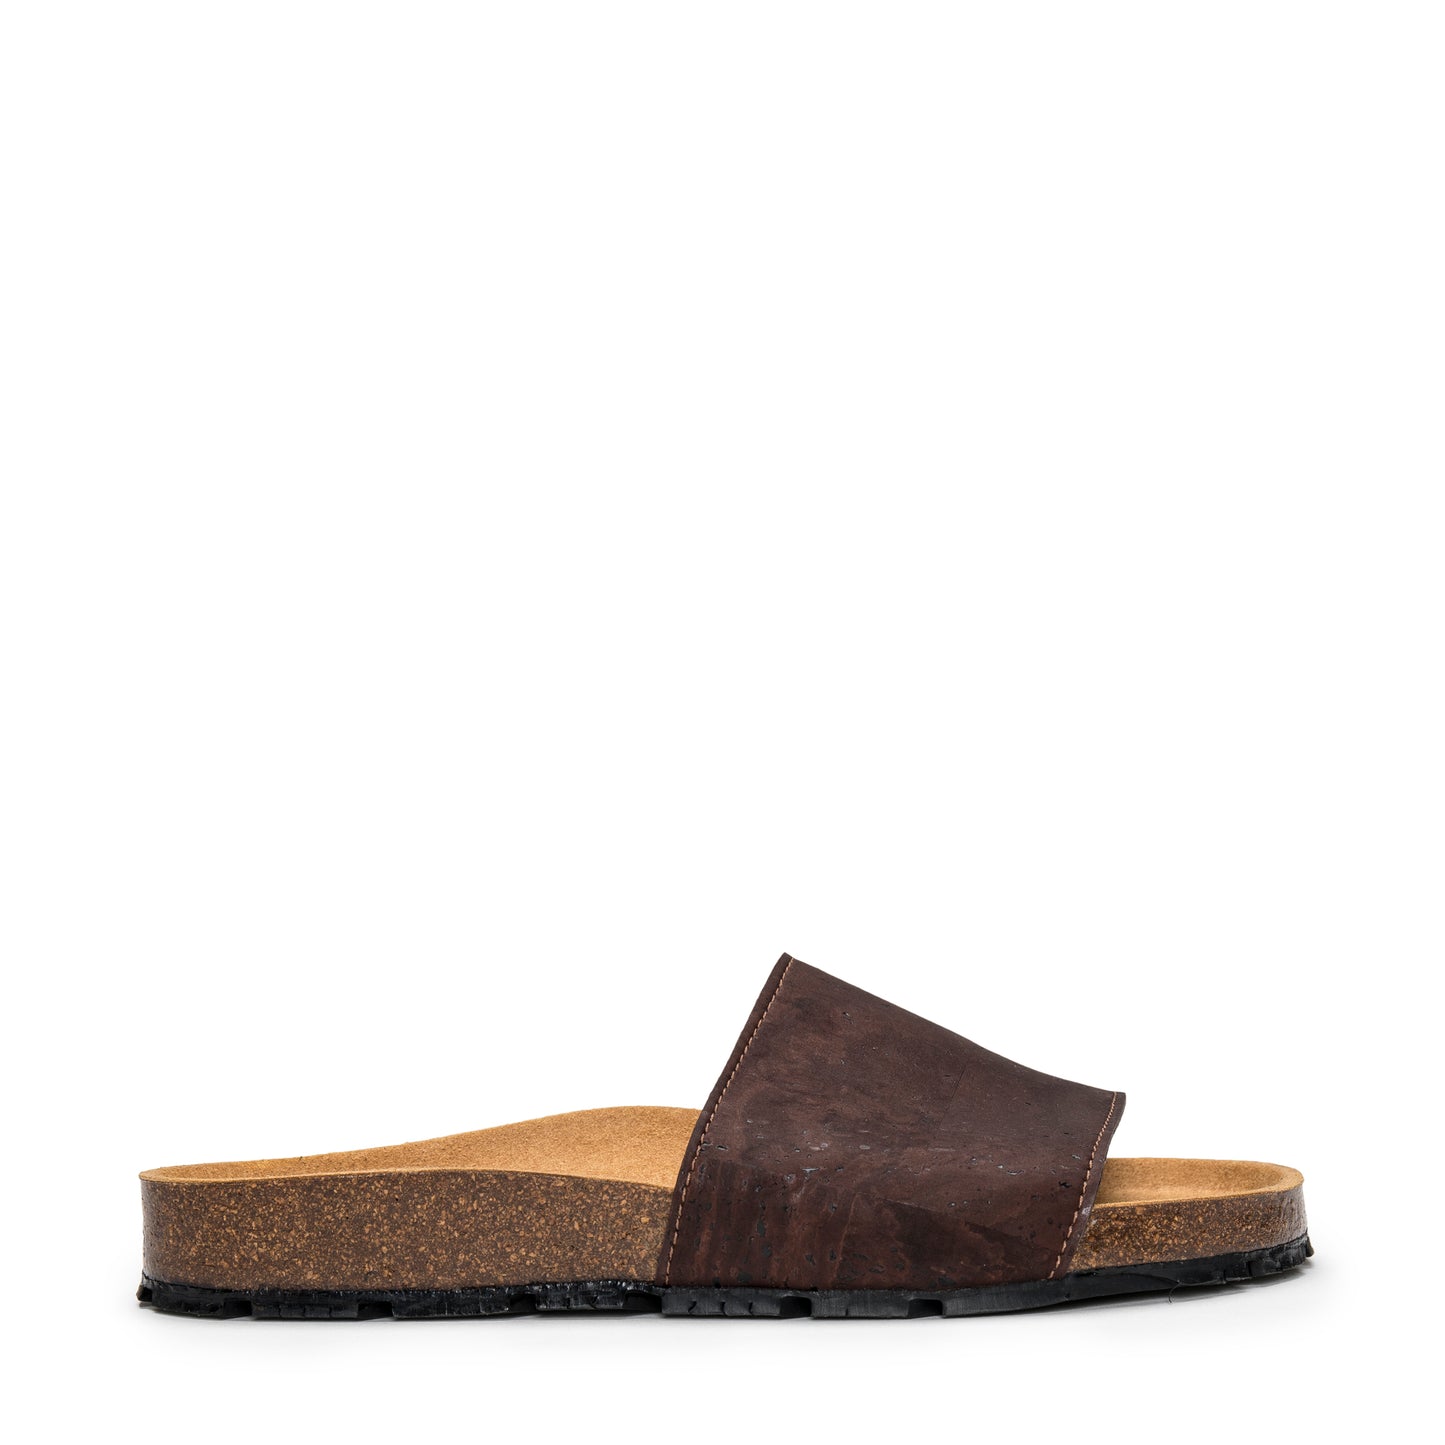 Bay Cork slip on vegan sandals